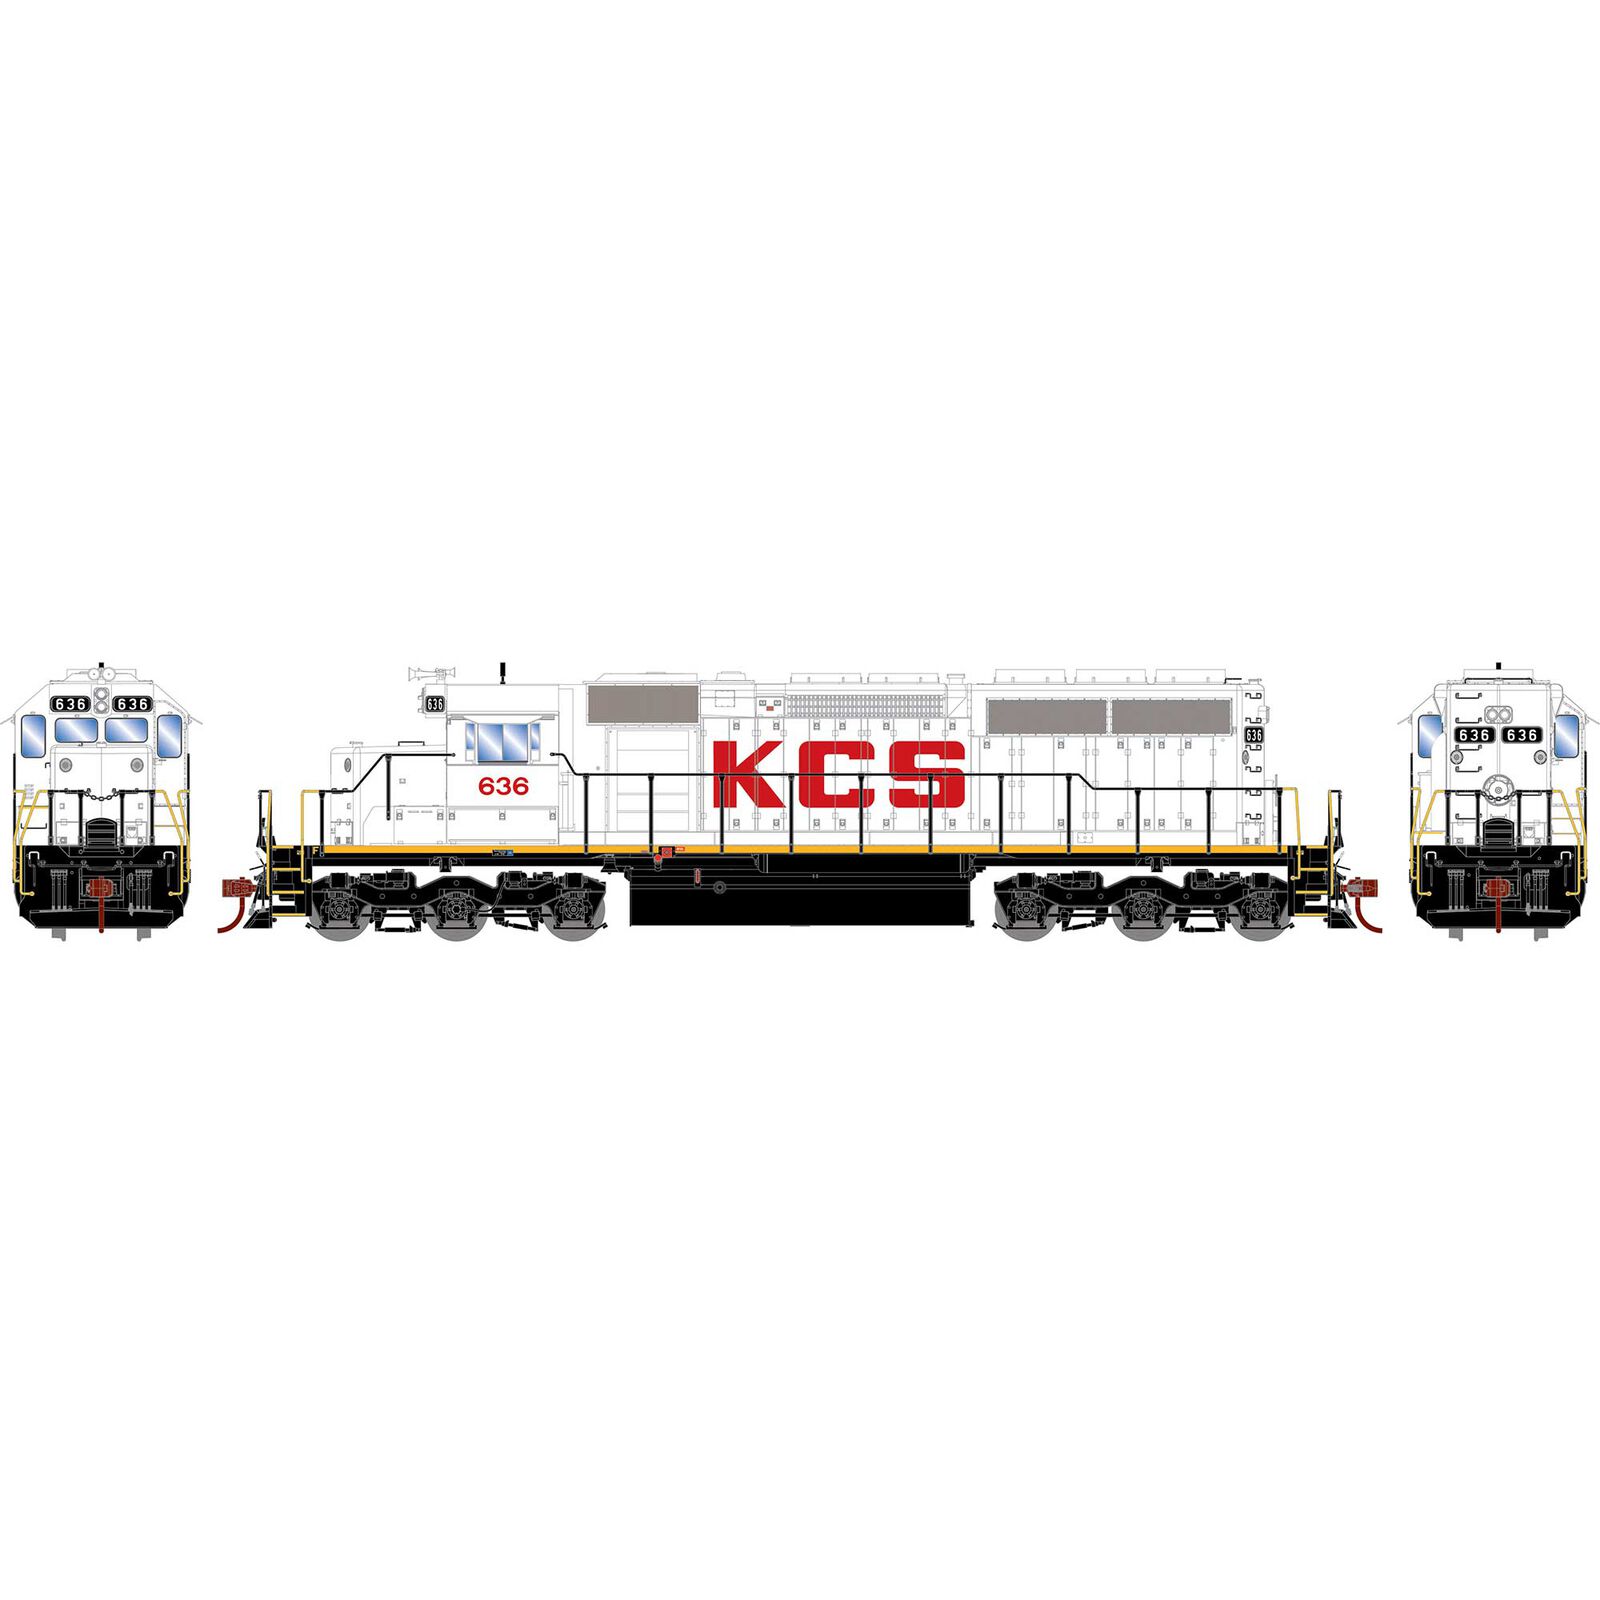 HO SD40 Locomotive, Kansas City Southern #636